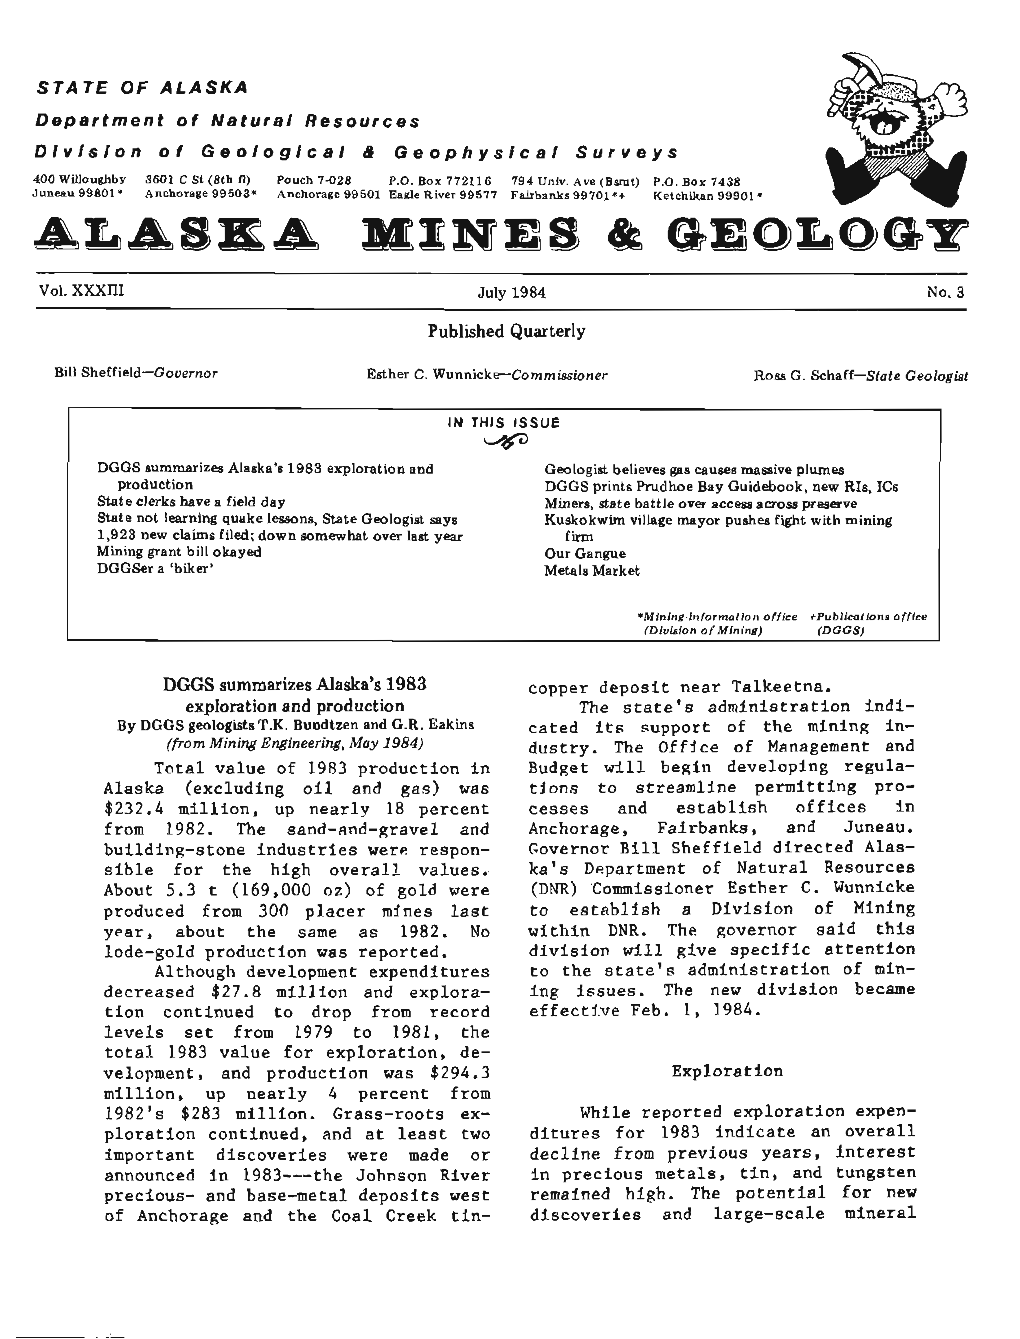 Published Quarterly DGGS Summarizes Alaska's 1983 Exploration and Production Total Value of 1983 Production in Alaska